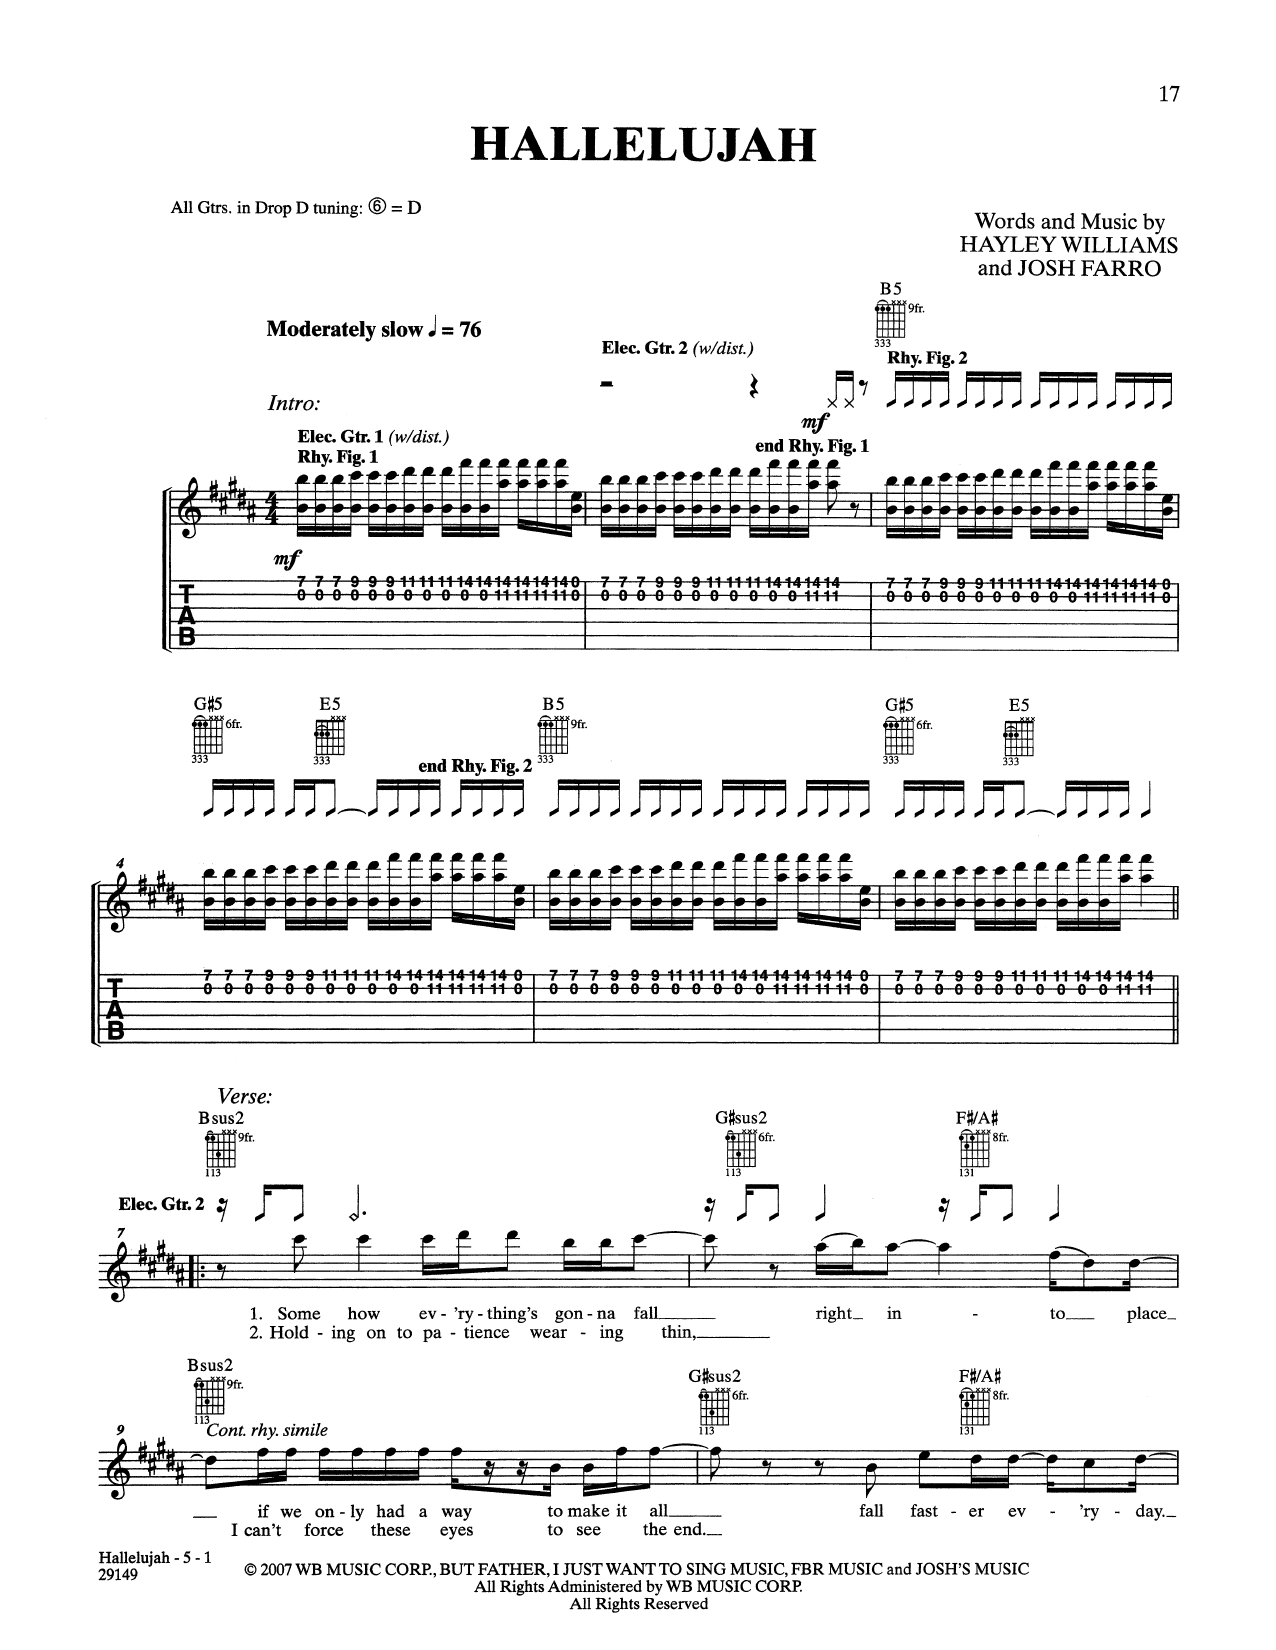 Paramore Hallelujah Sheet Music Notes & Chords for Guitar Tab - Download or Print PDF